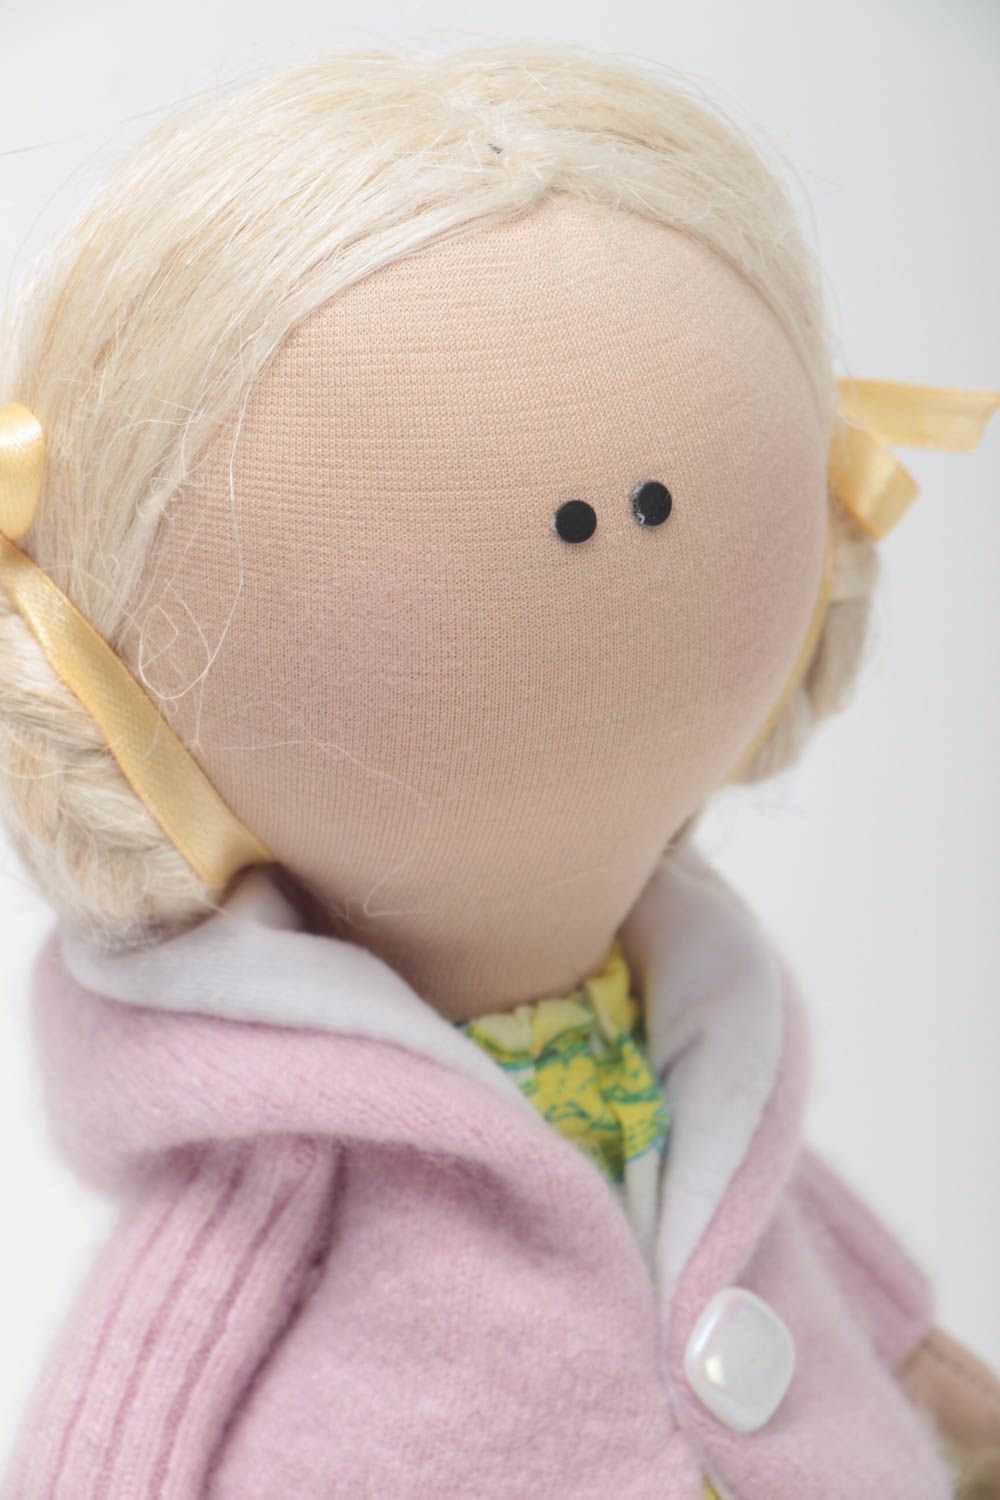 Handmade rag doll childrens soft stuffed toy best toys for kids gift ideas photo 3